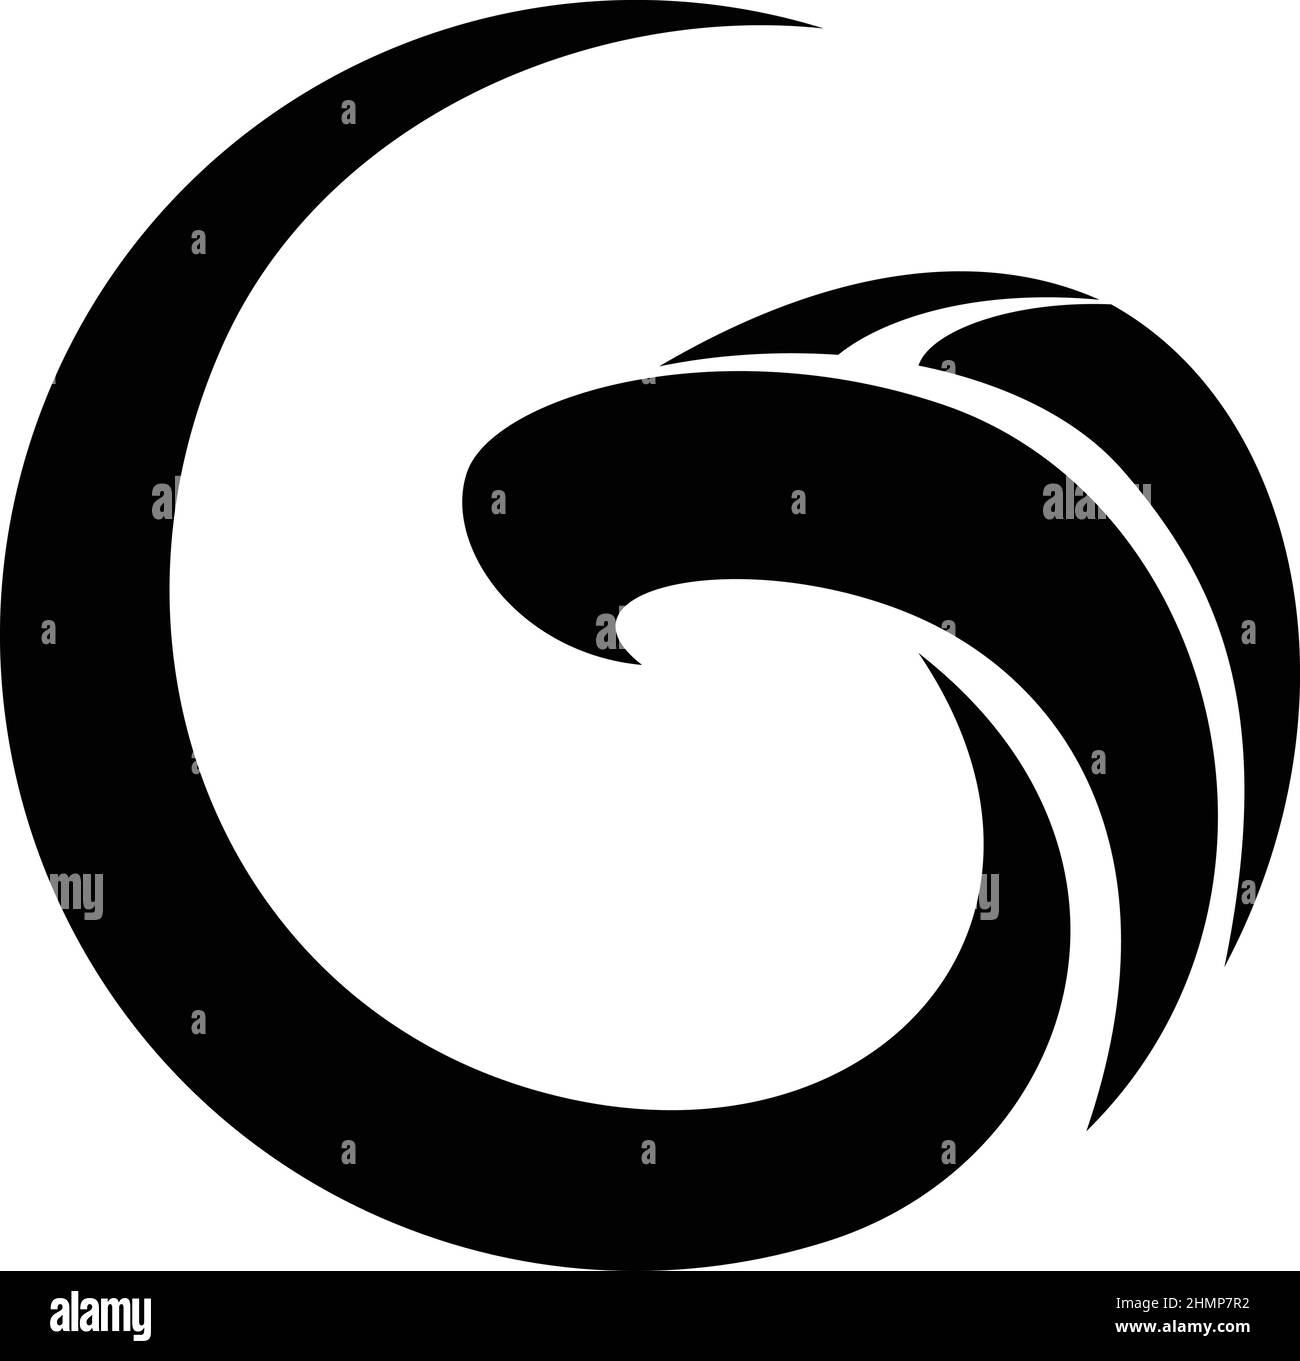 Simple Design of Abstract Eagle Logo Stock Vector